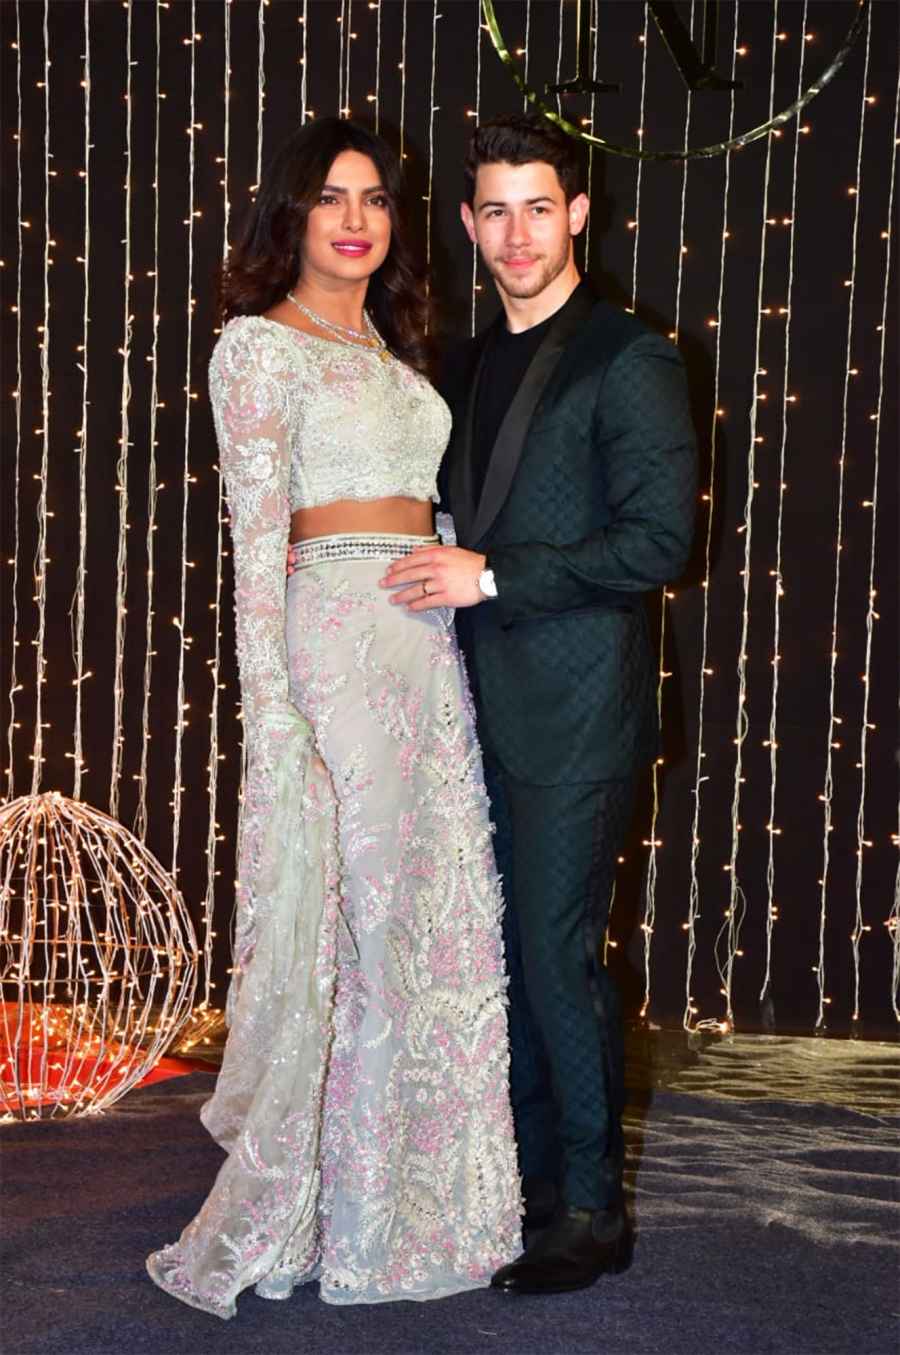 Nick Jonas and Priyanka Chopra Continue Their Wedding Celebration With Third Reception